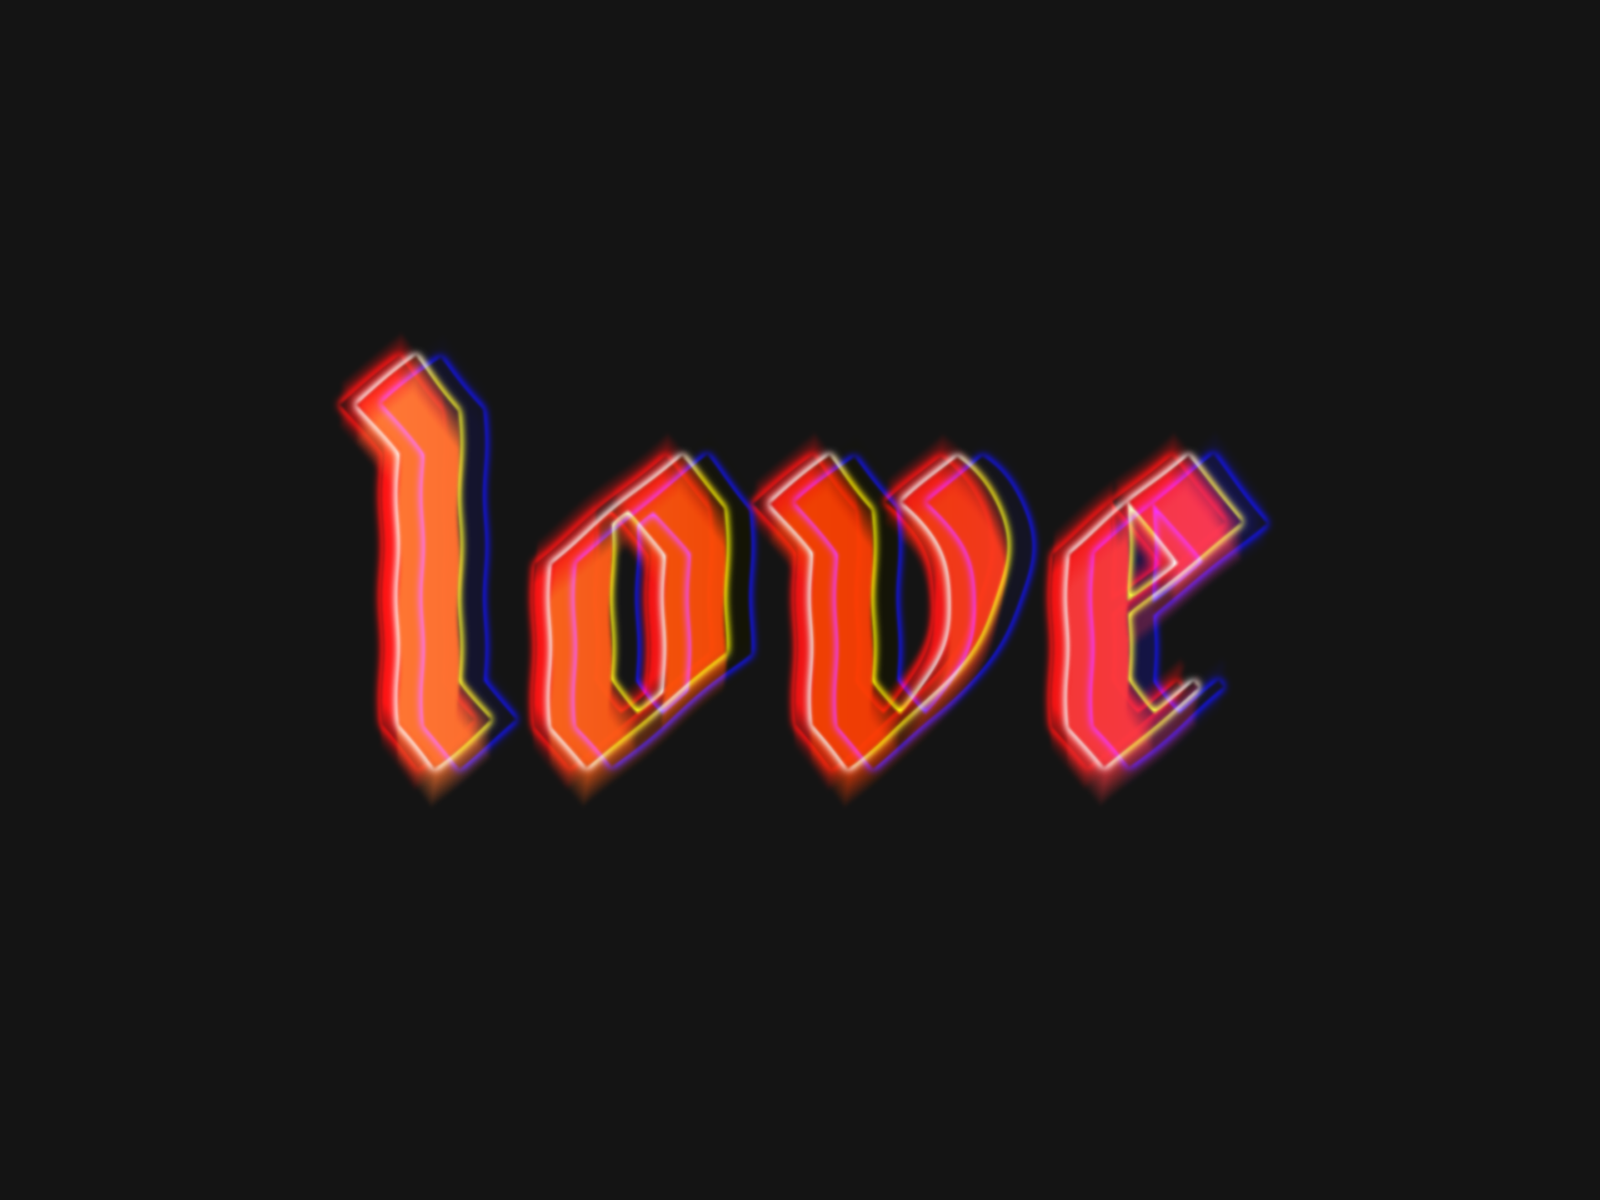 Love in Neon Style by Biljana Trifunovic on Dribbble